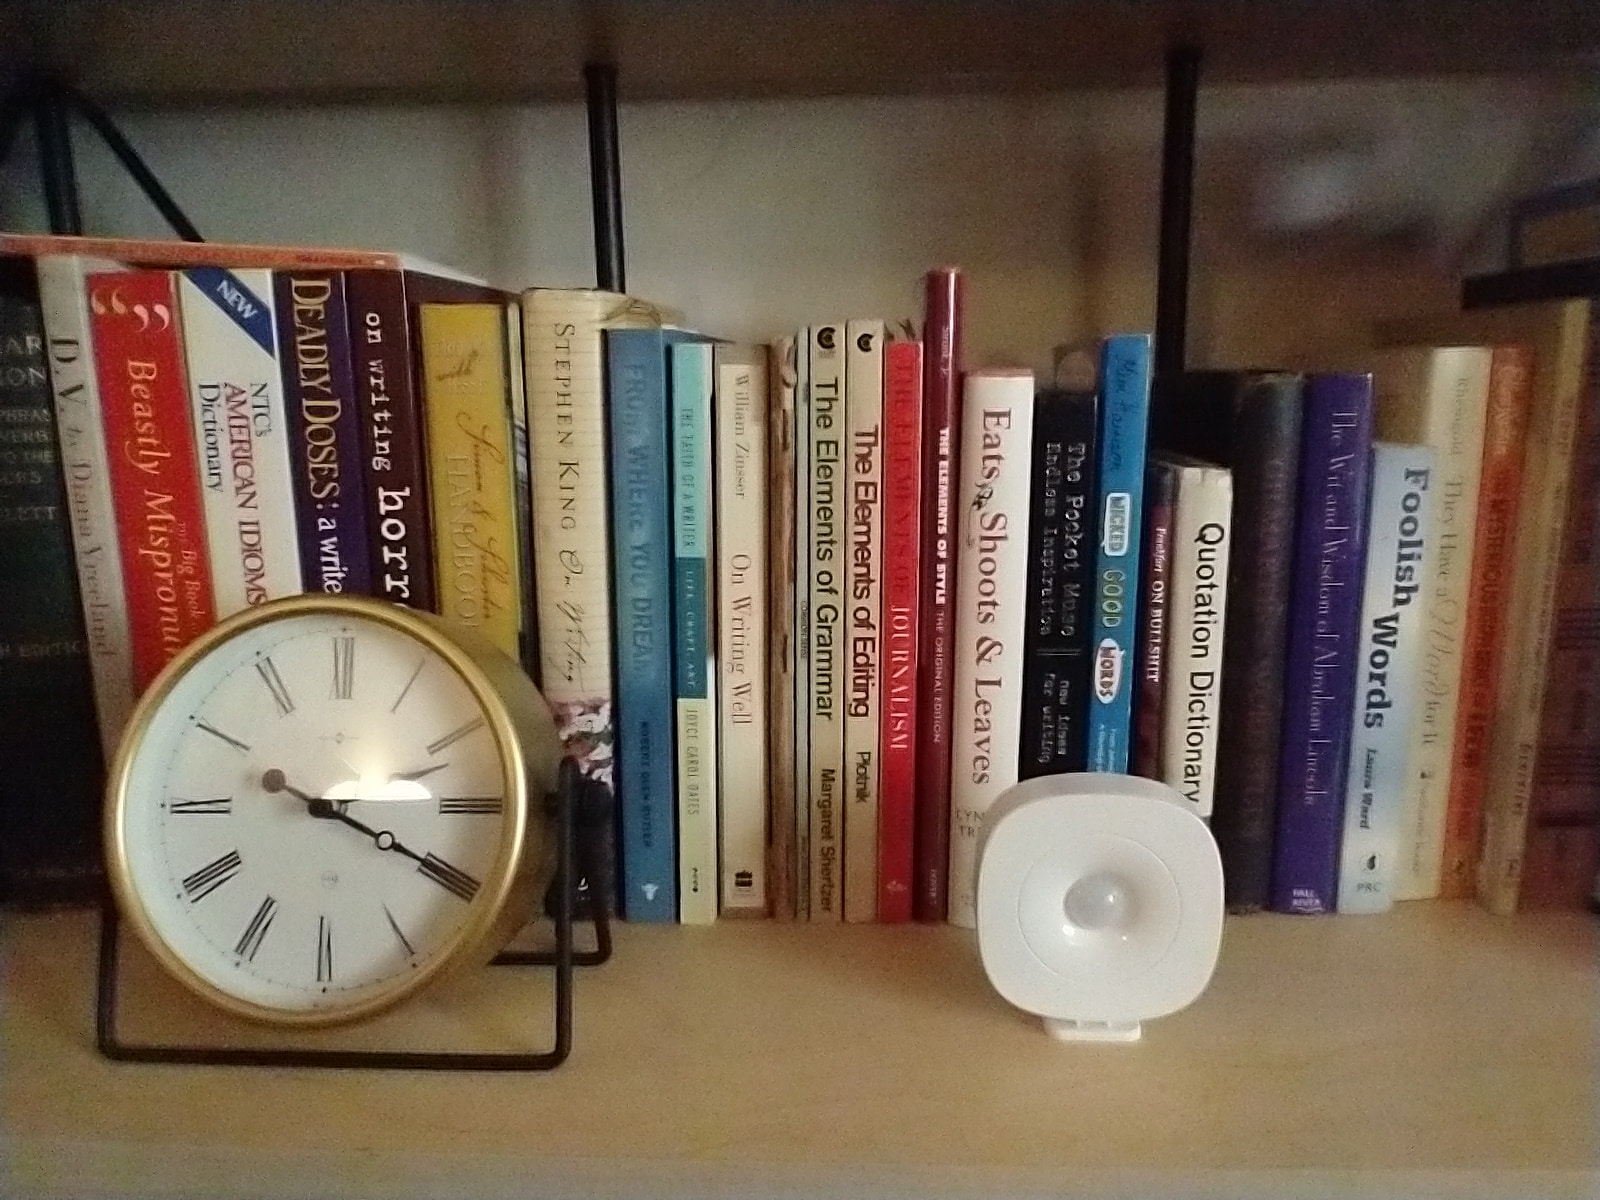 Aloe Care Health motion sensor on a bookshelf next to a clock.